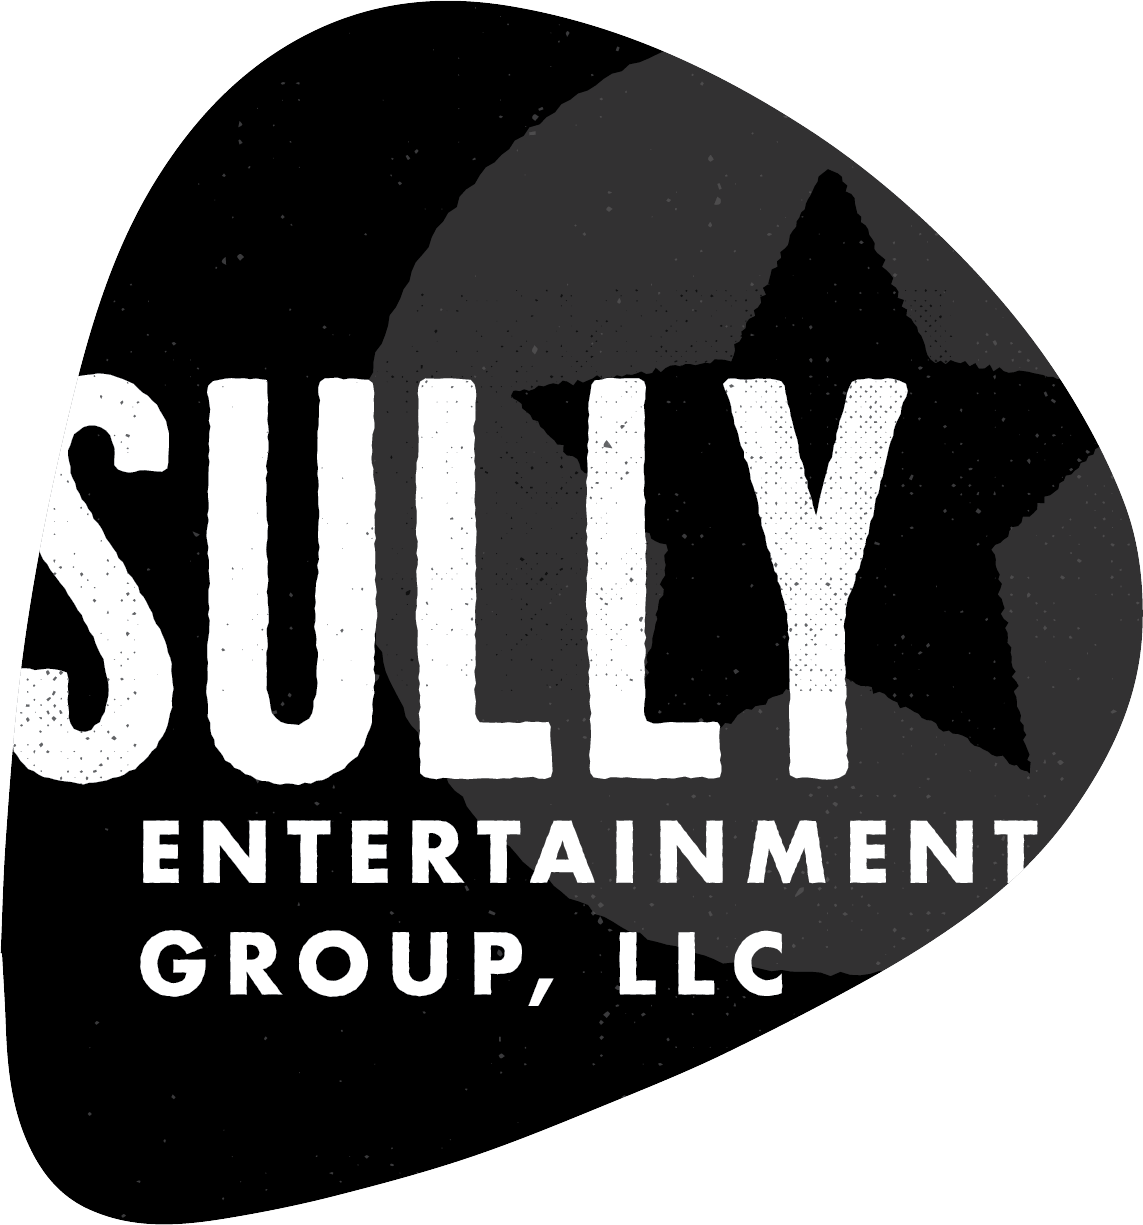 Sully Entertainment Group, LLC